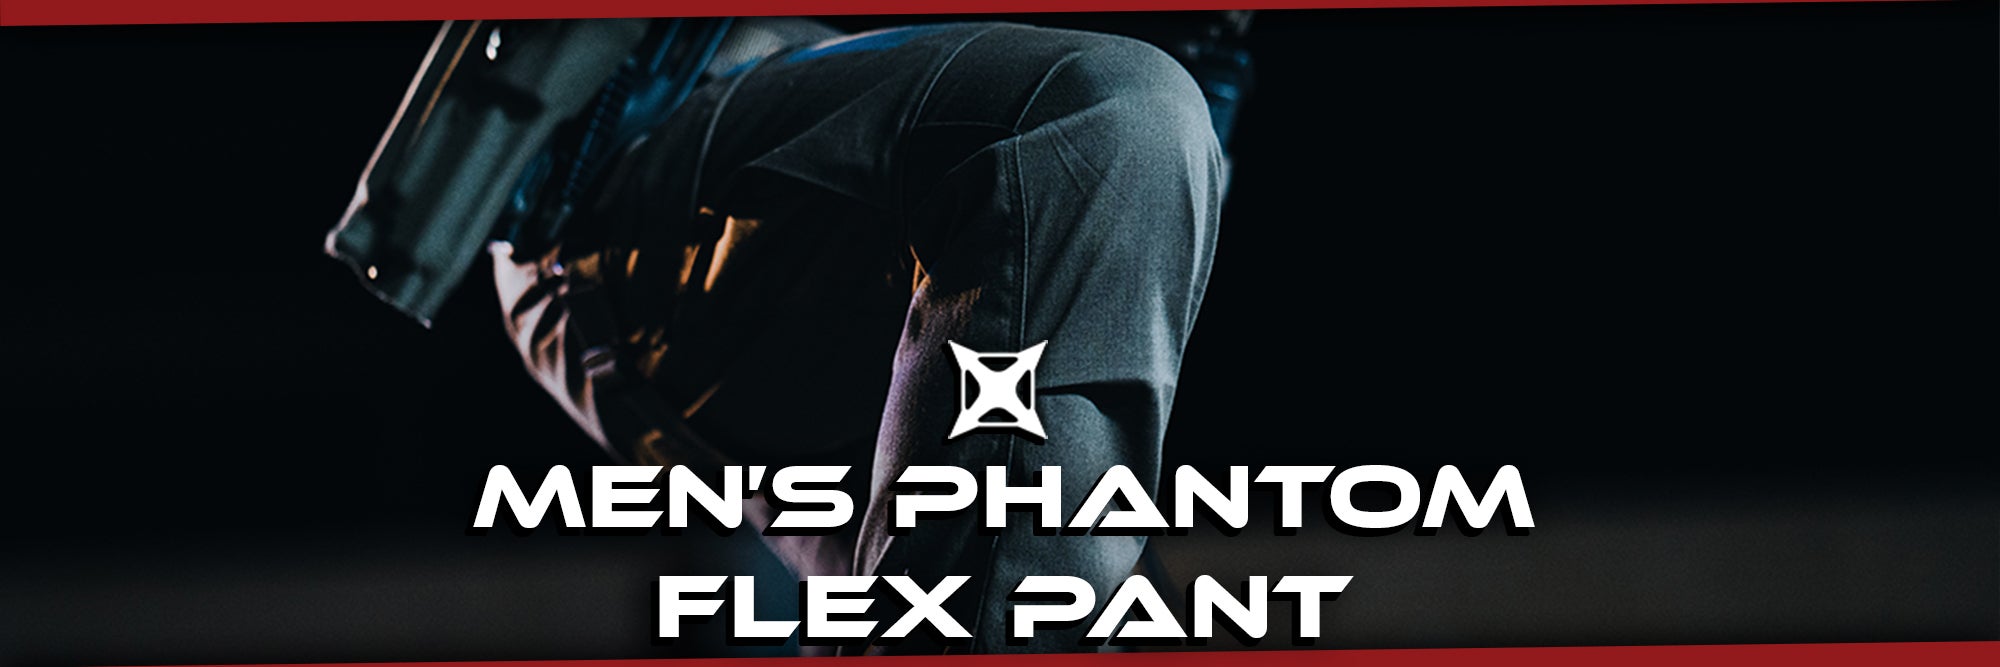 Vertx Men's Phantom Flex Pant